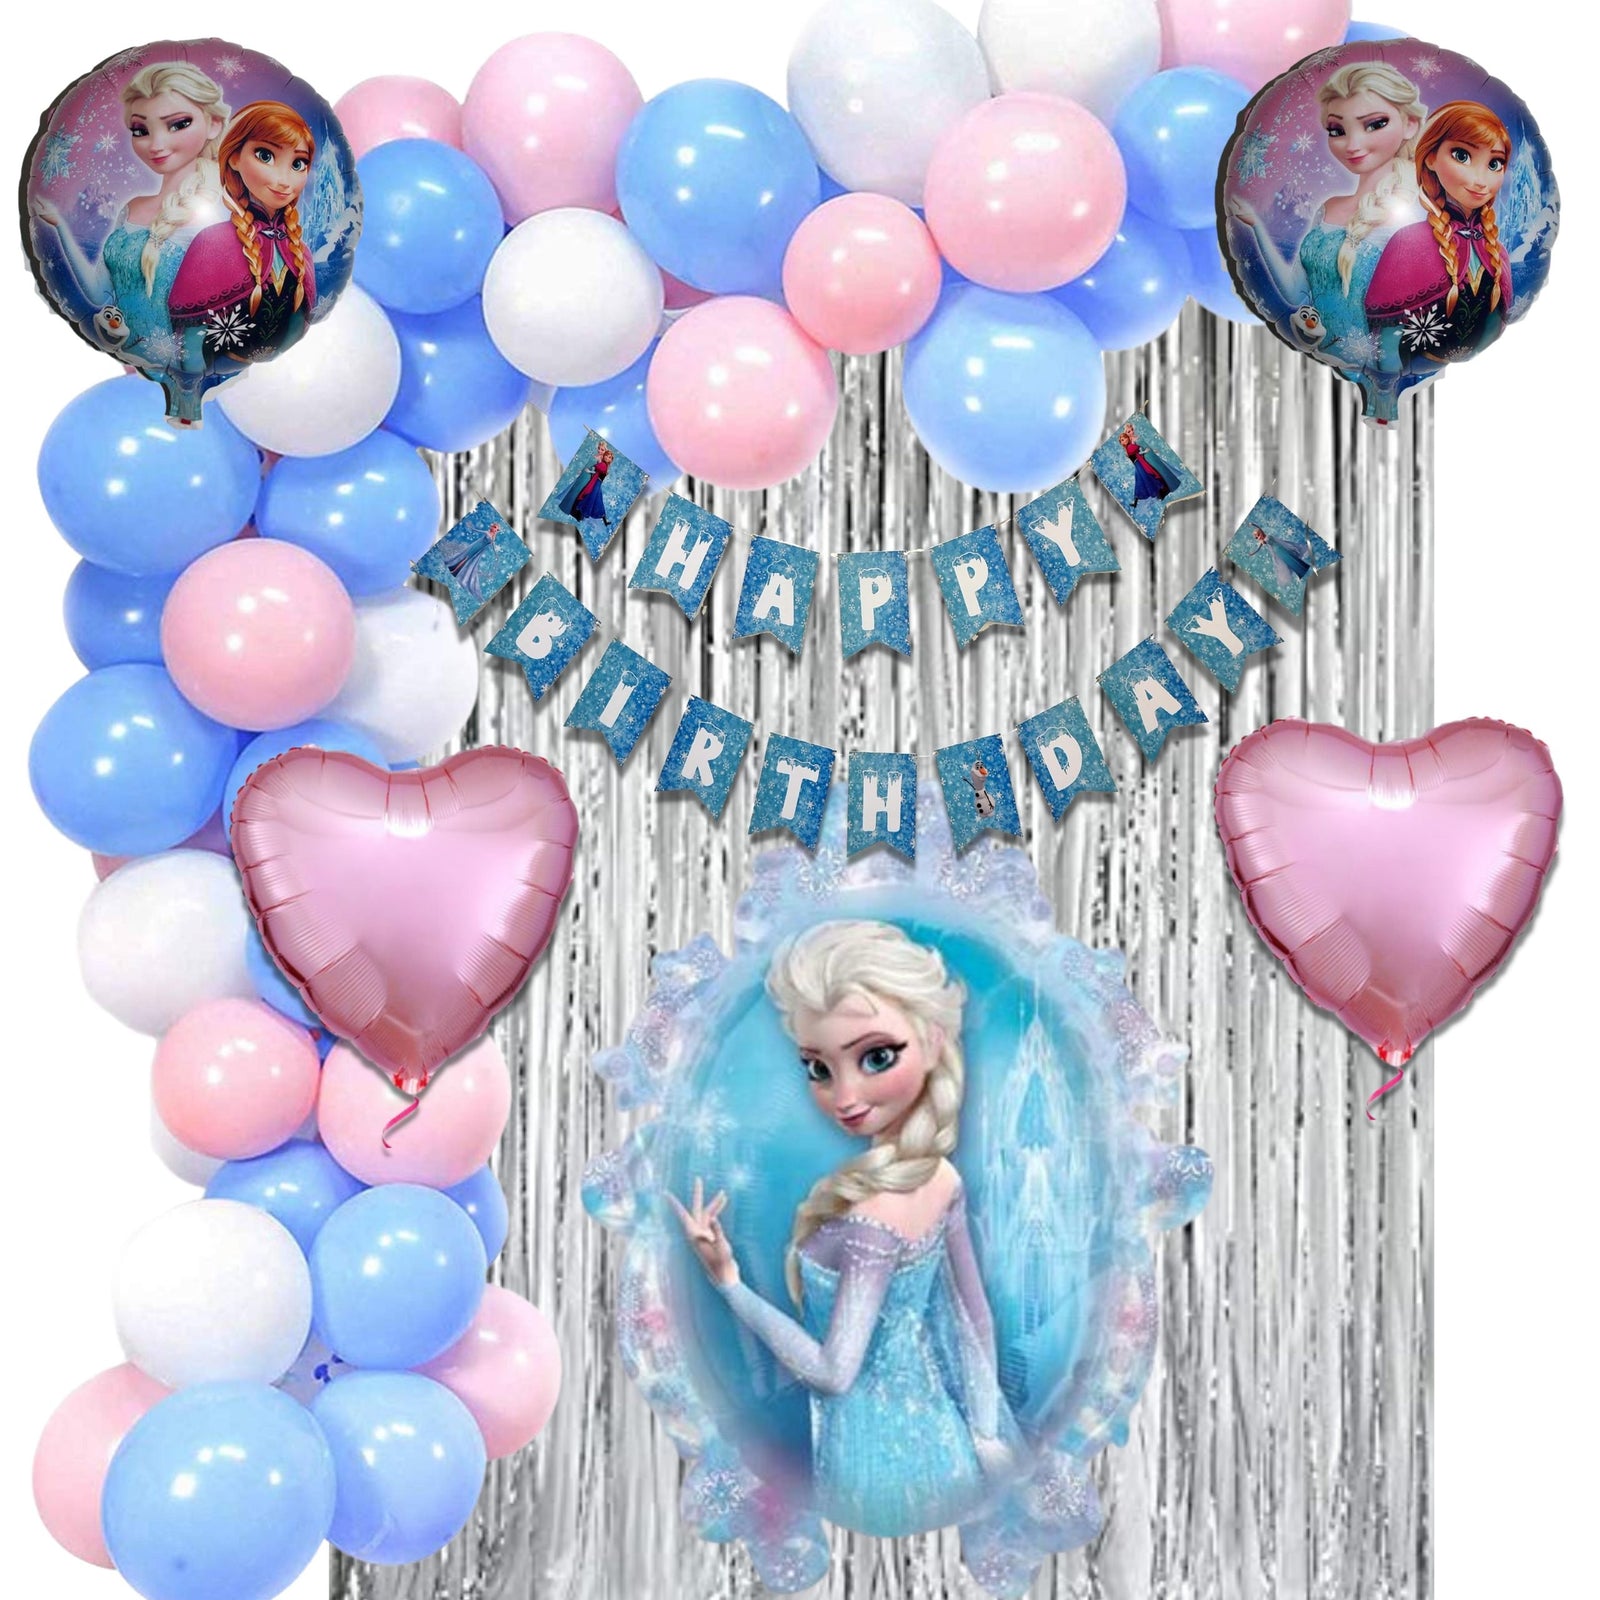 Frozen Theme Birthday Decoration for Girls 56 Pcs – Princess Elsa Birthday Party Decorations – Frozen Birthday Decorations for Girls